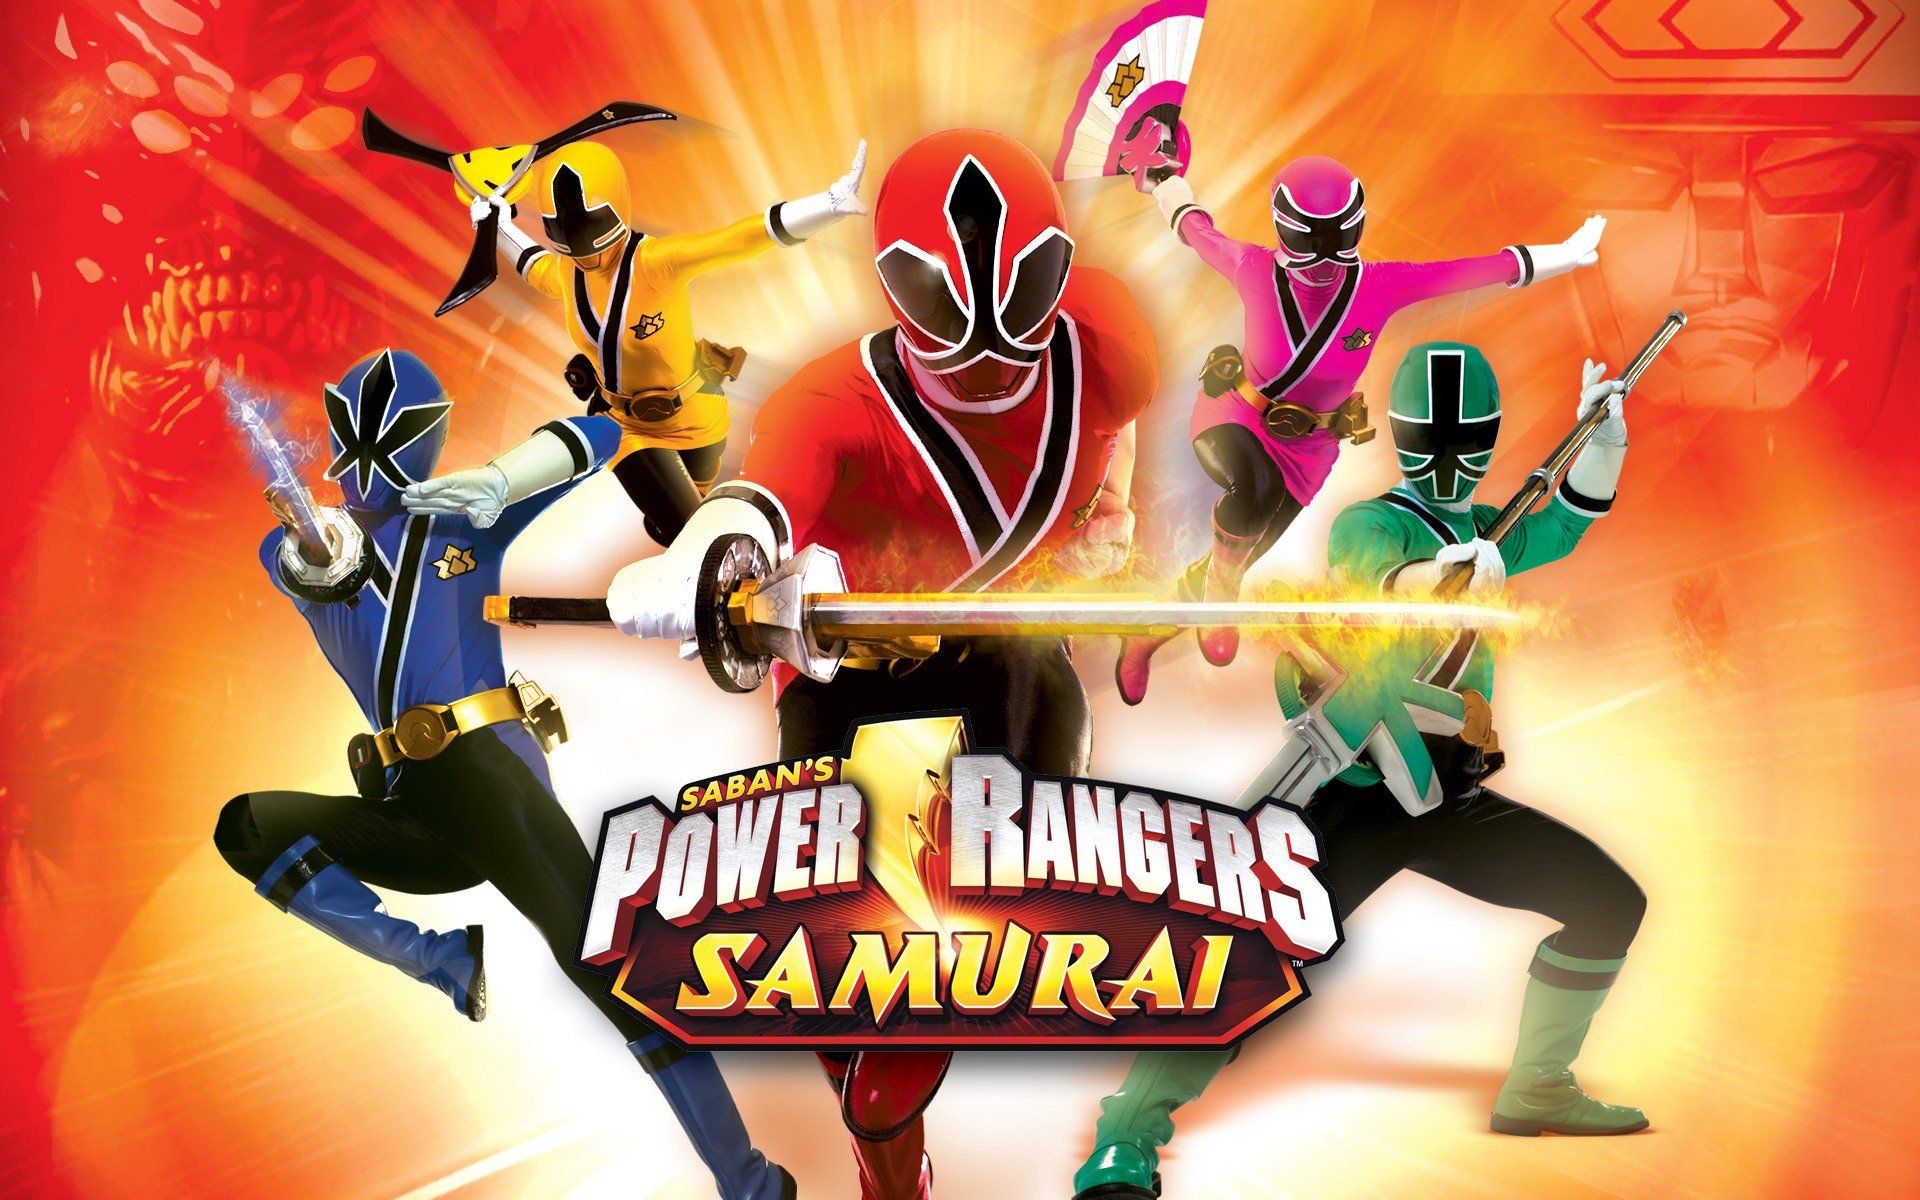 Power Rangers Samurai Game Download Apk